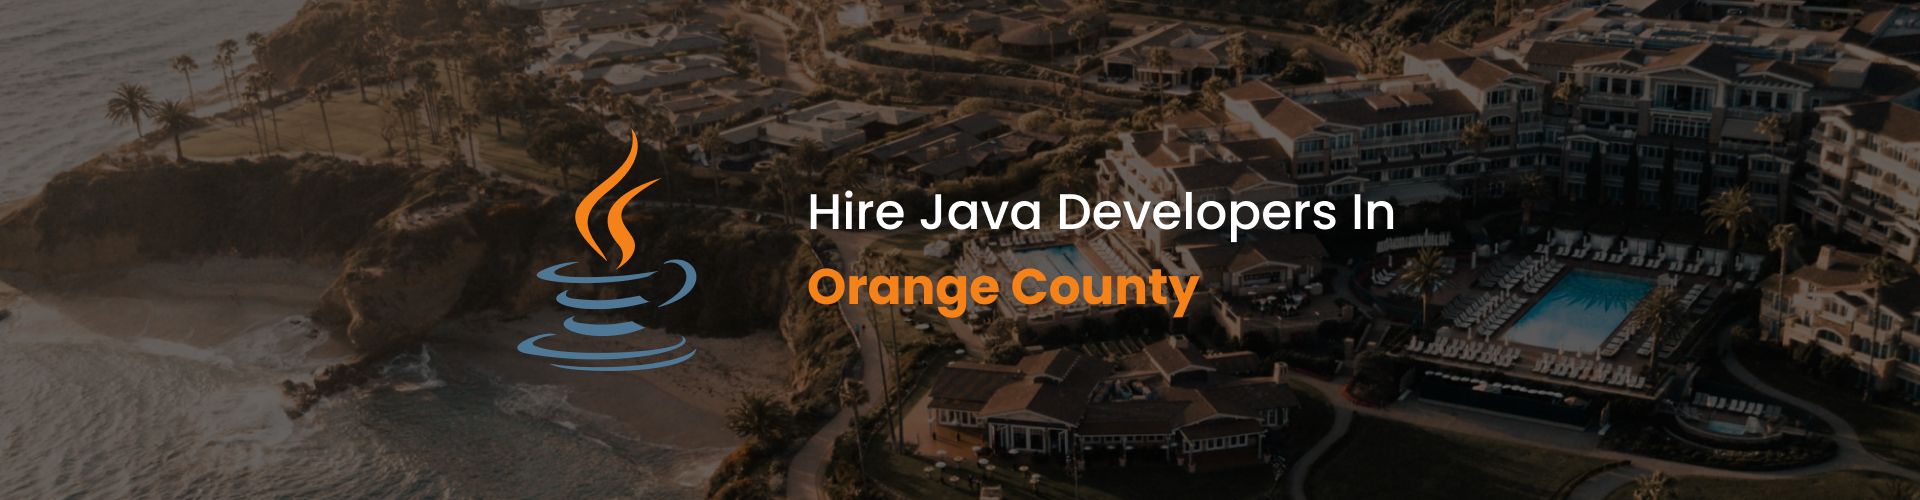 hire java developers in orange county